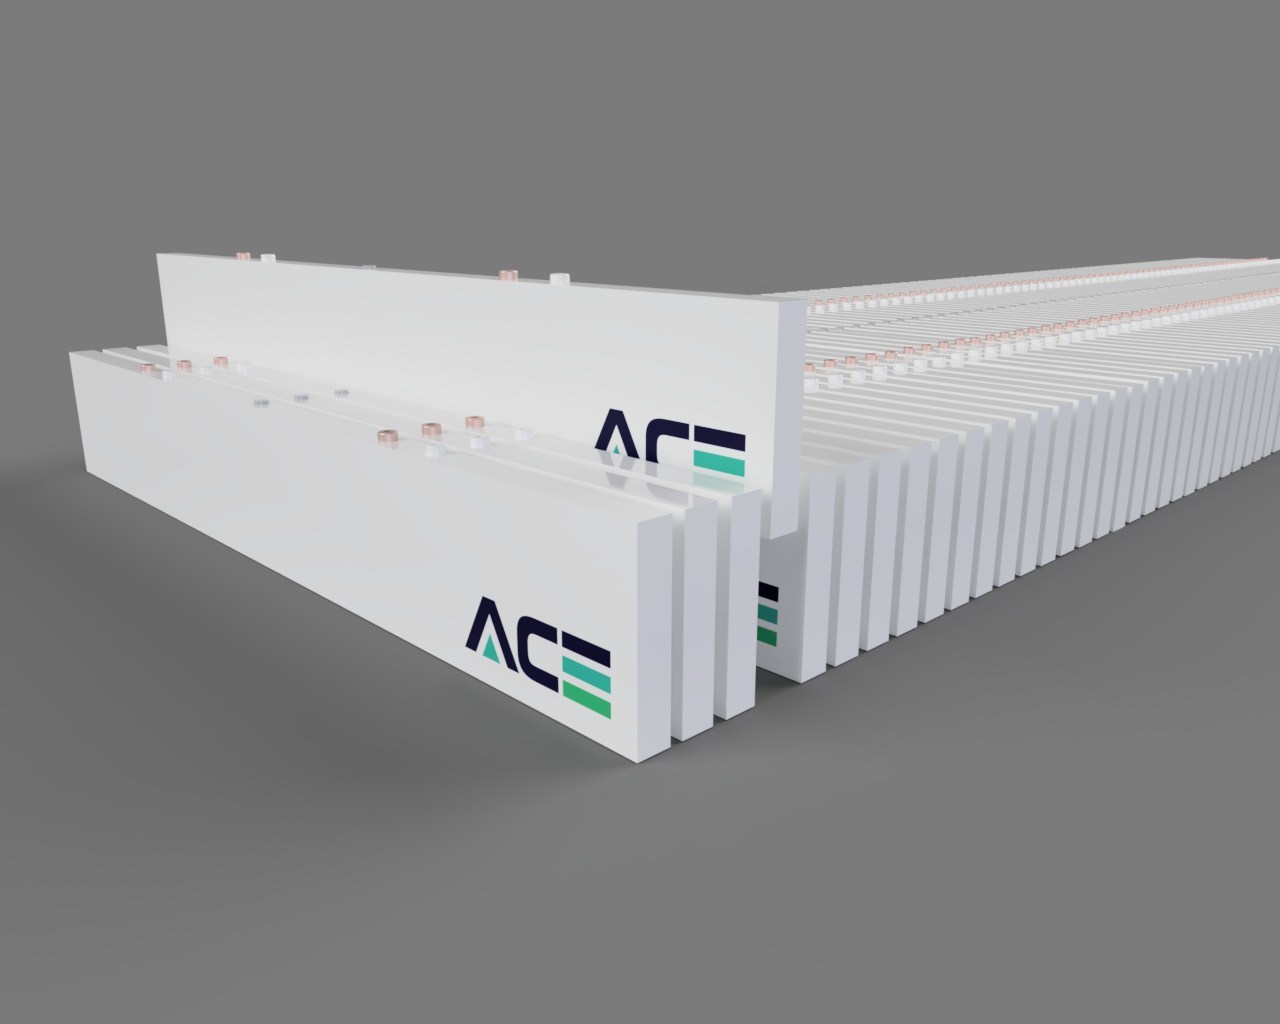  ACE Batteries Drive LFP Technology Closer to Li-ion for EVs